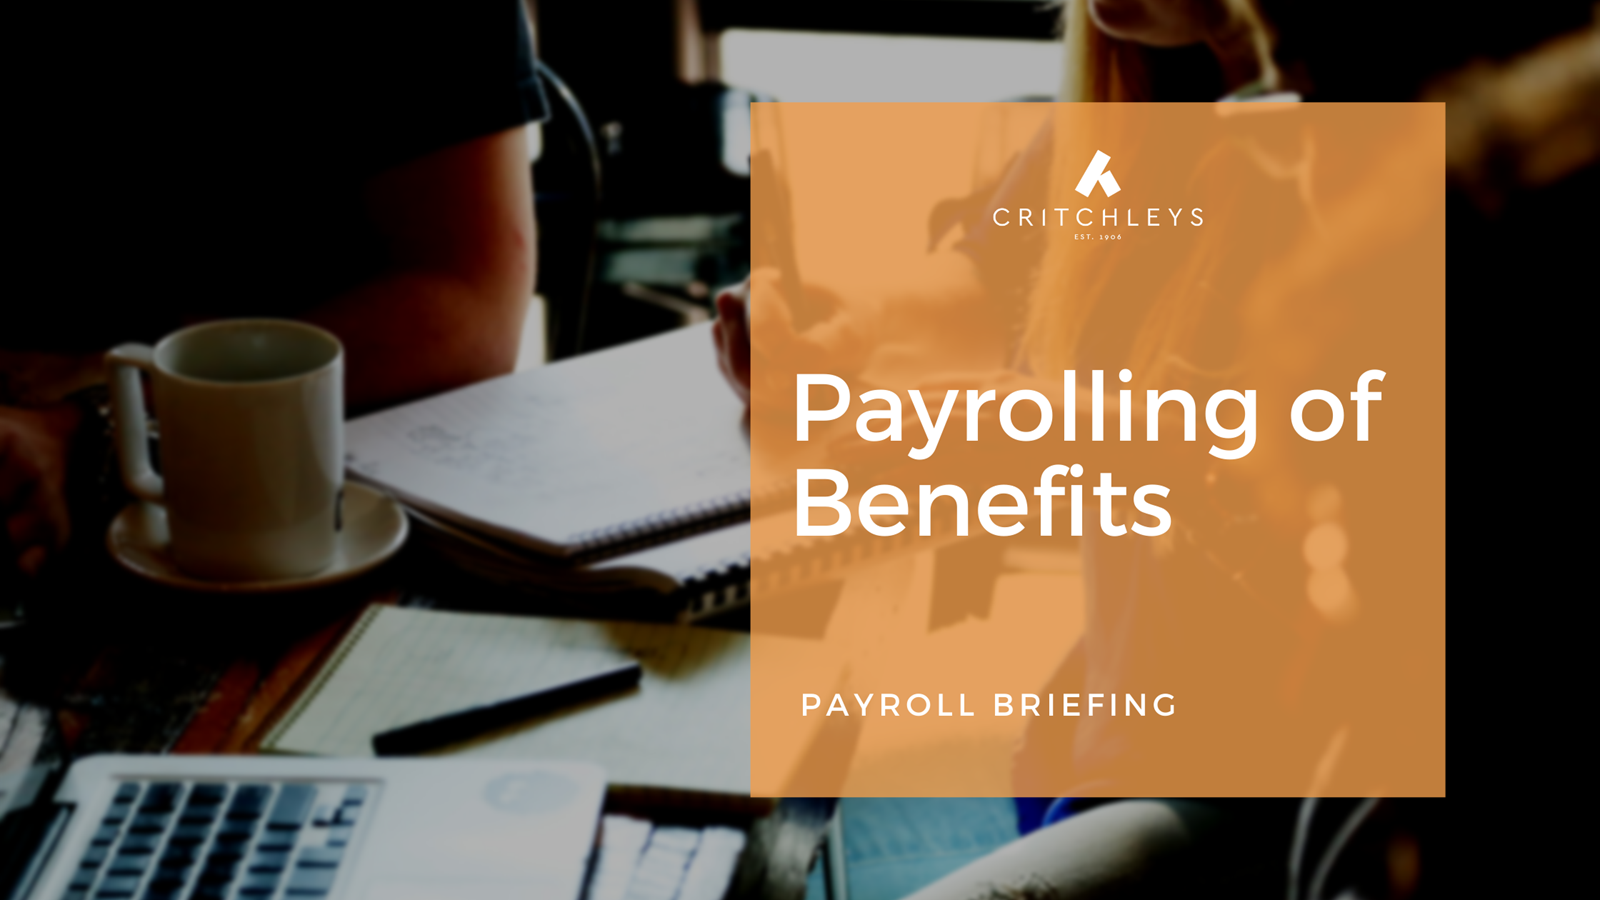 Payrolling of Benefits